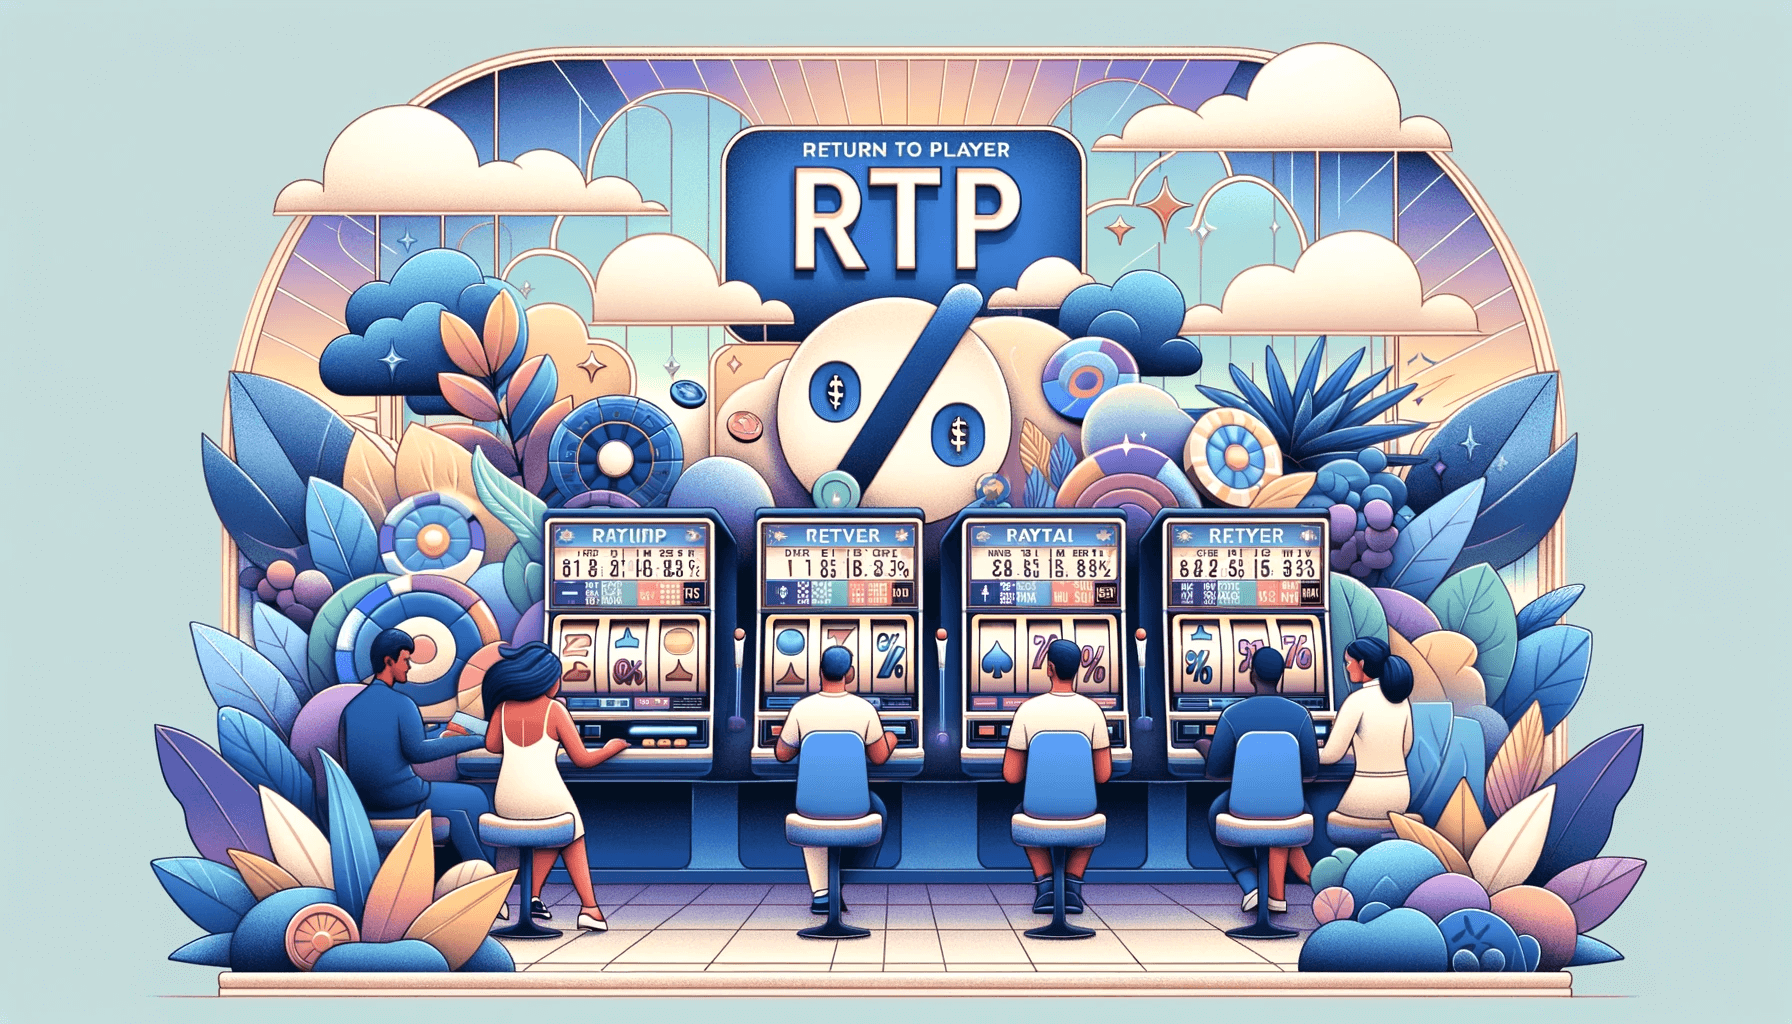 RTP หรือ (Return to Player) ในเกมคาสิโนคืออะไร?